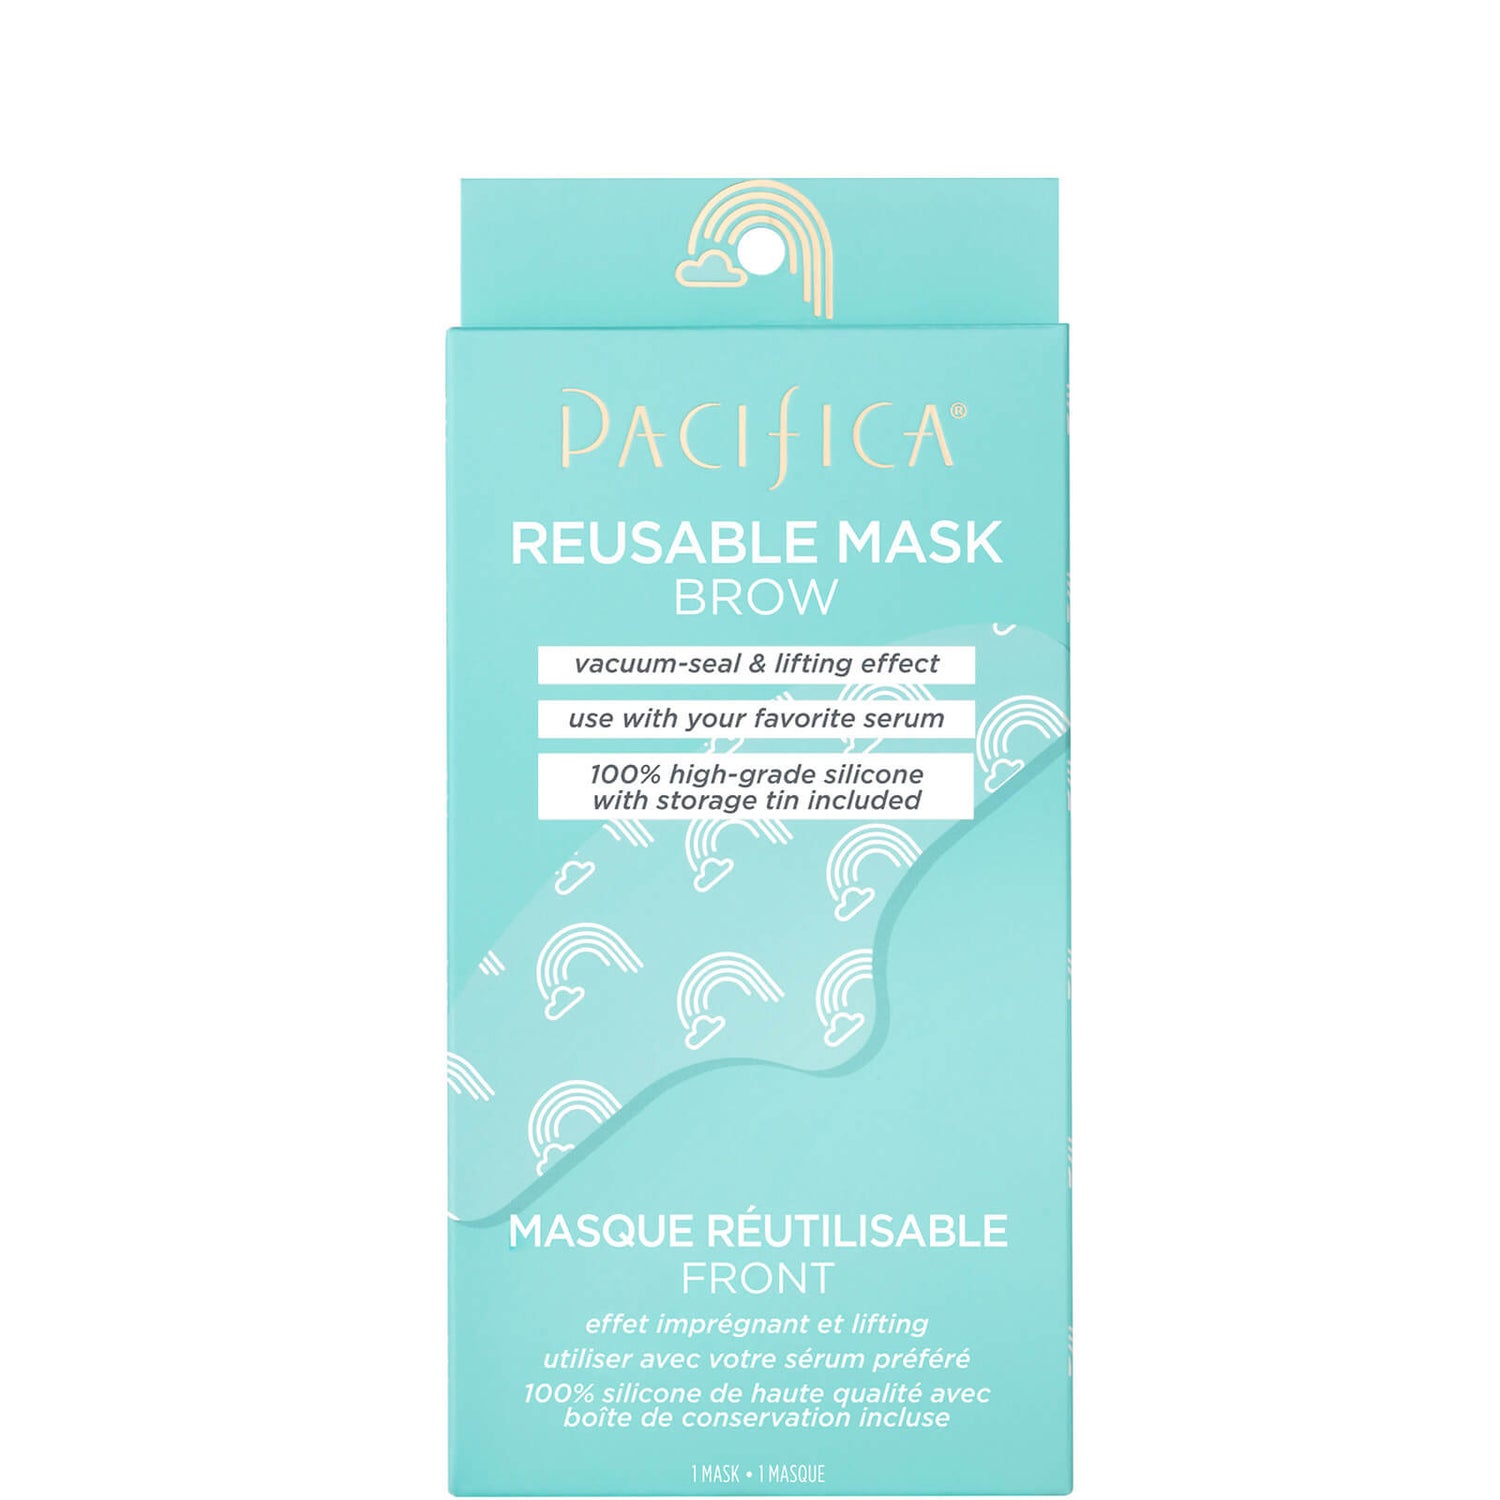 Pacifica Reusable Mask Brow 1 pc